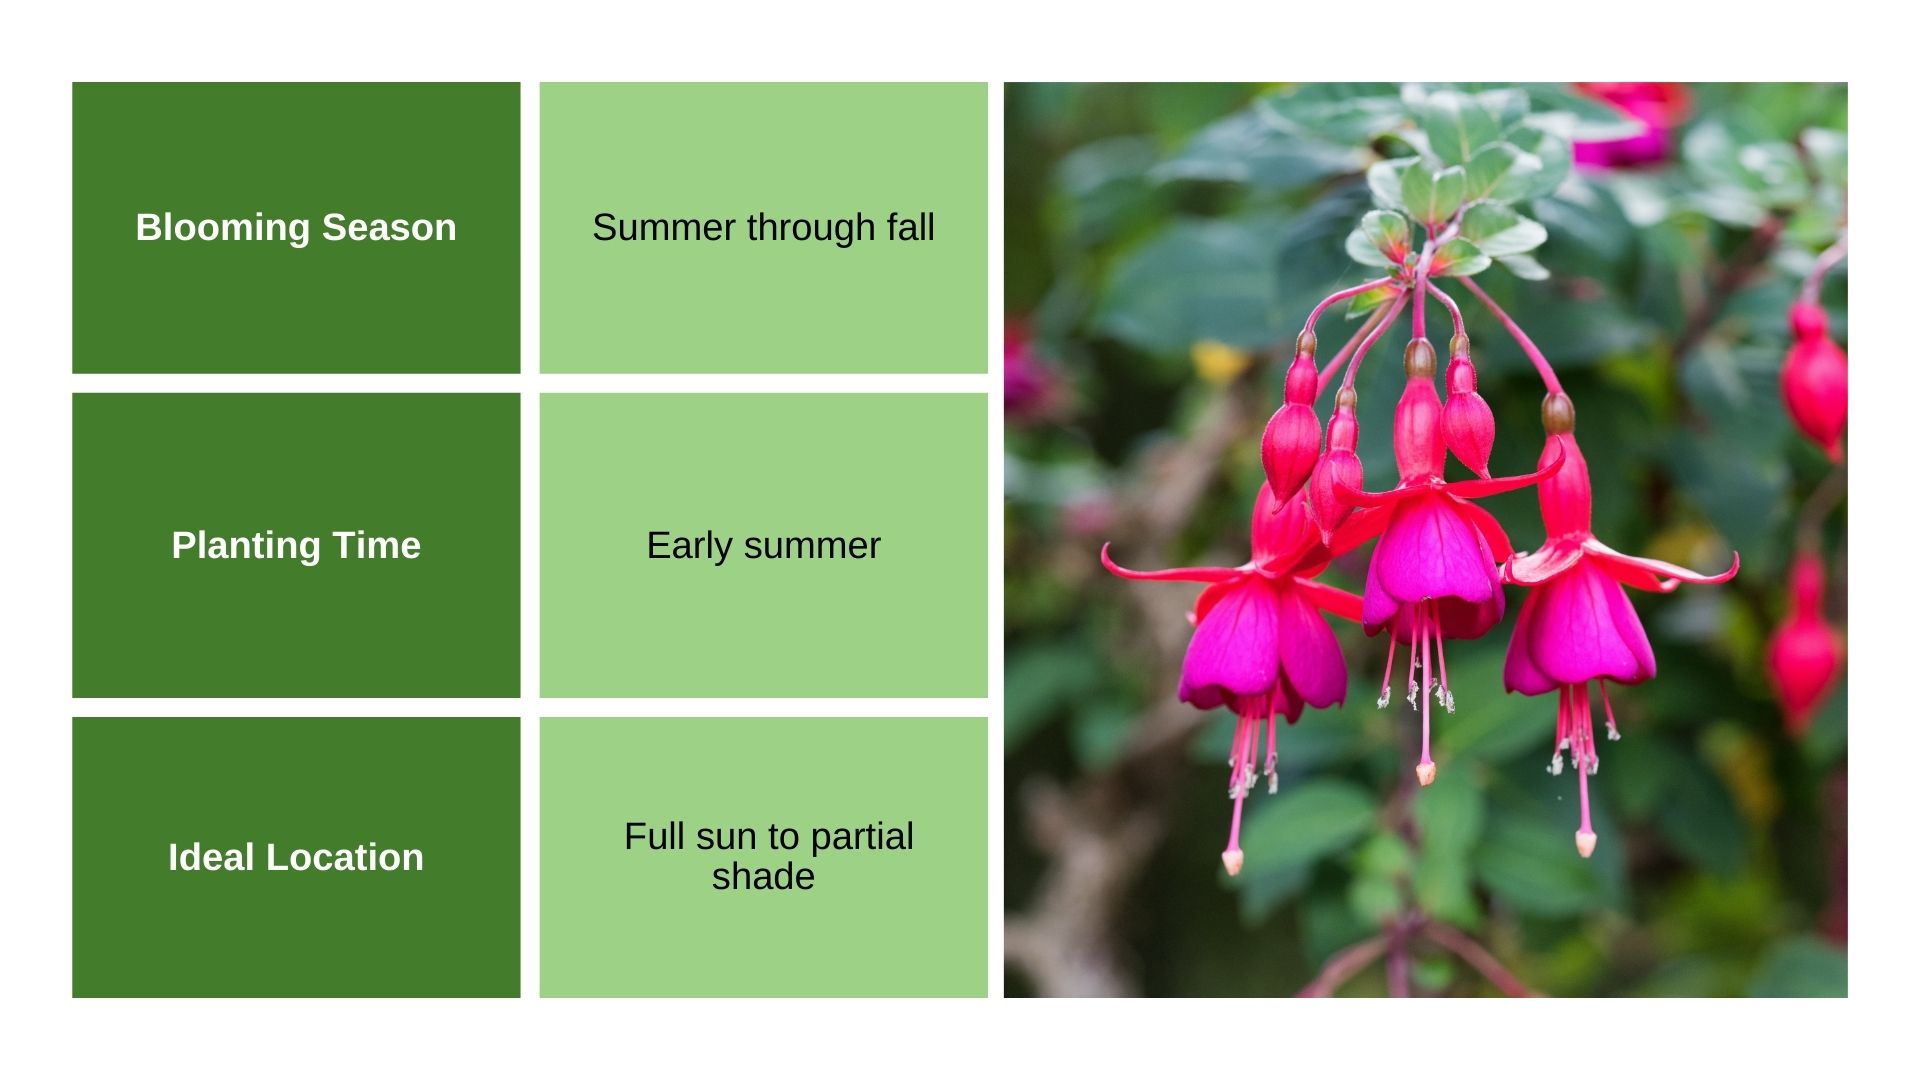 Fuchsia info chart and plant photo